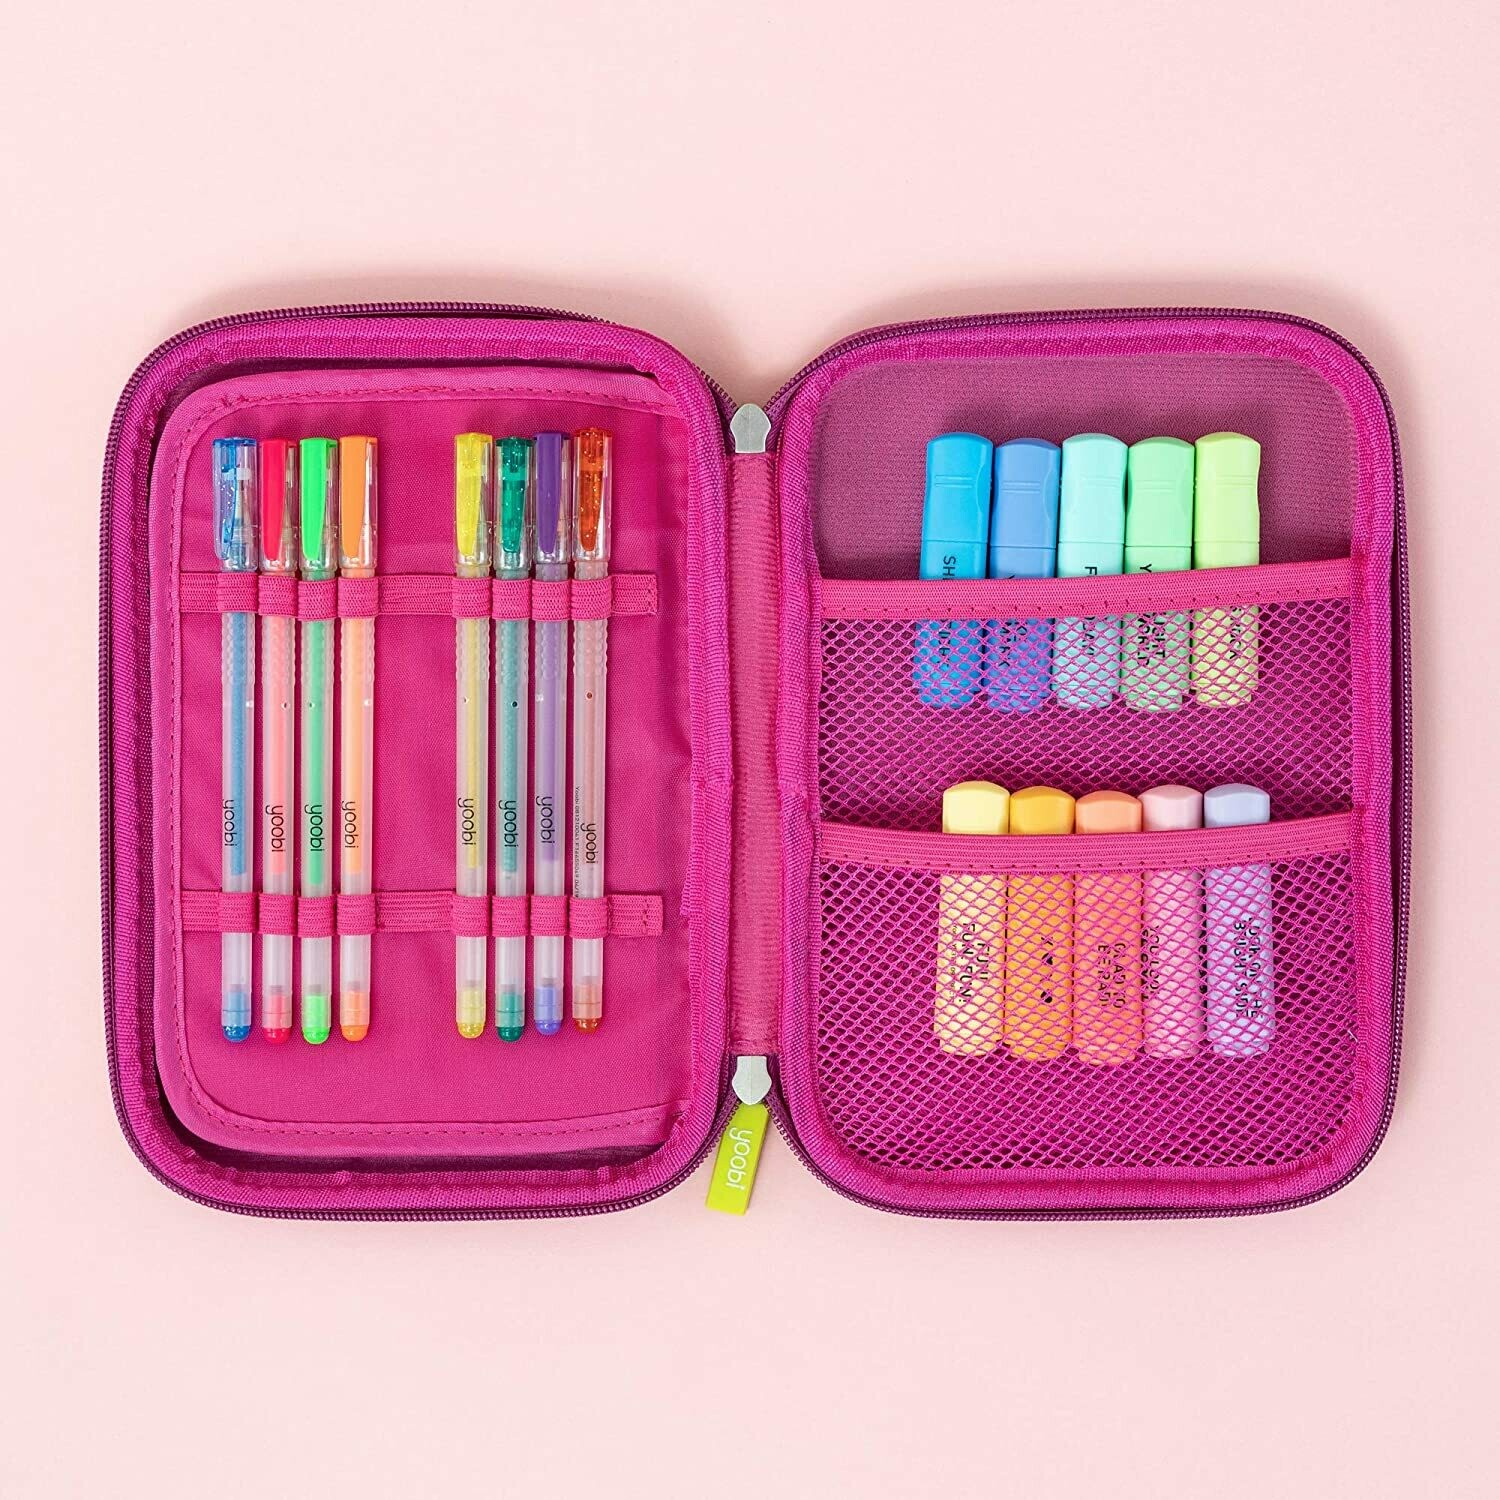 Yoobi Pencil Case Pink Pockets Zip Closure NEW